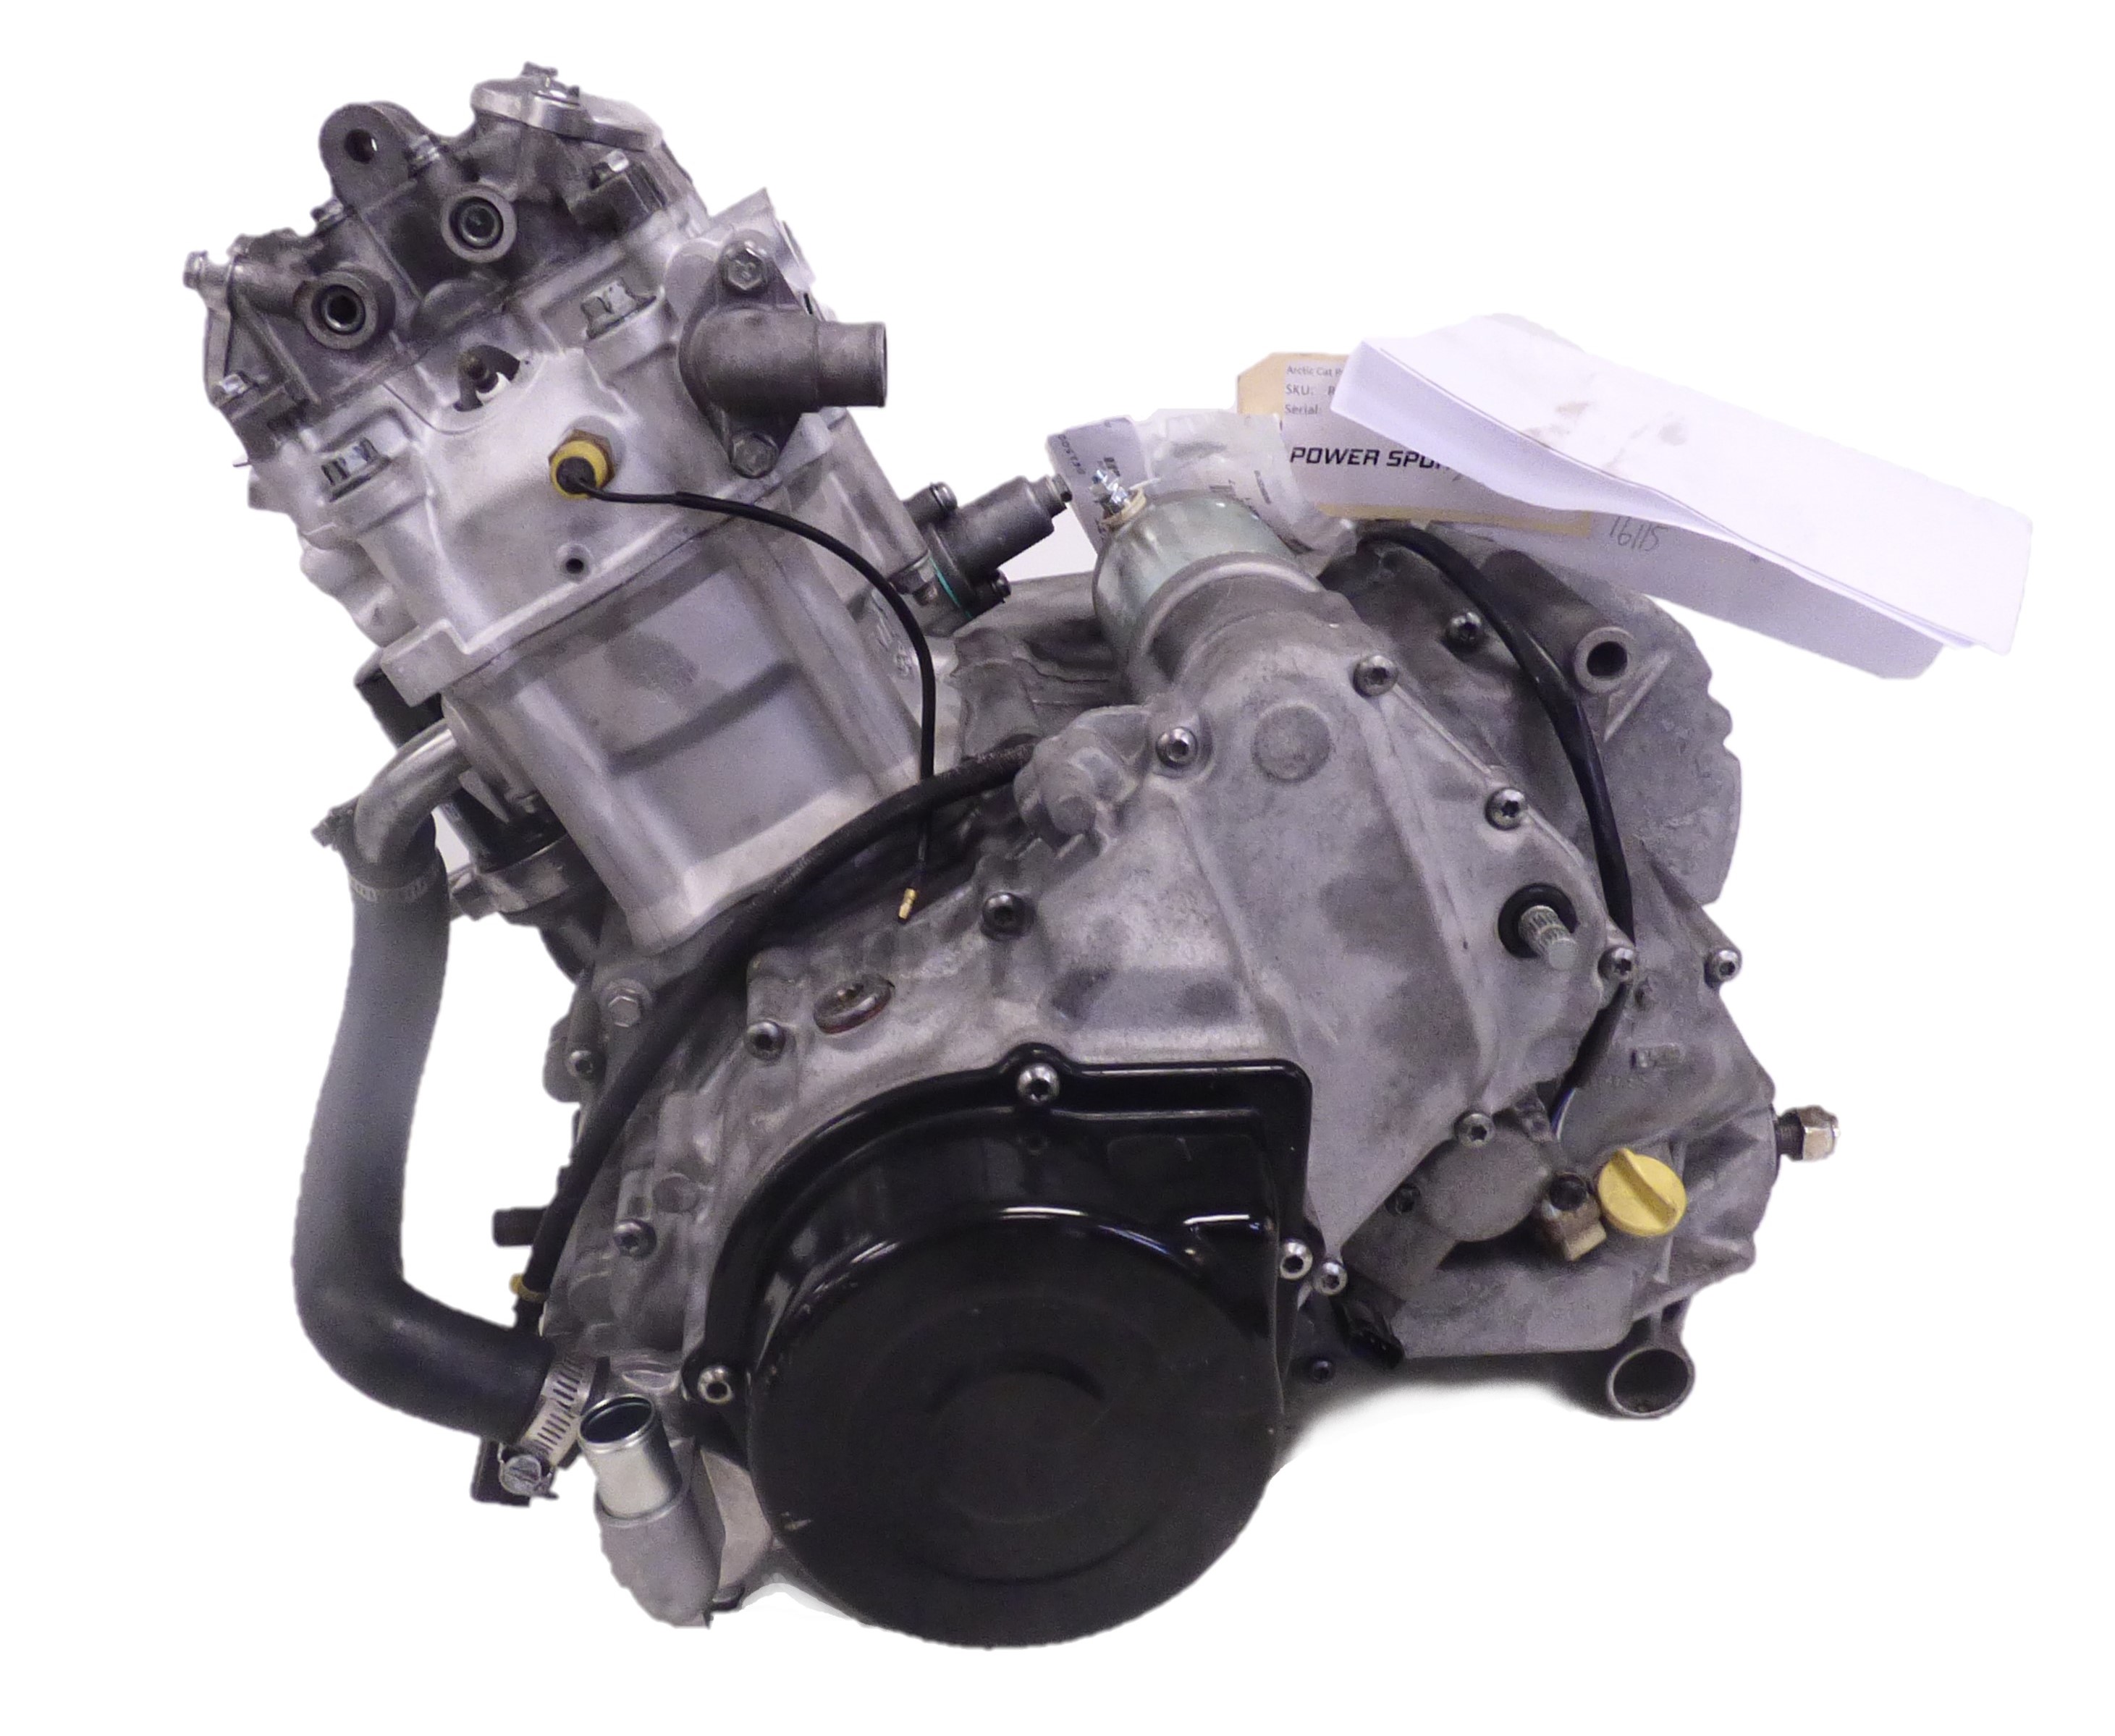 Arctic Cat Prowler 650 06 09 Engine Motor Rebuilt Ebay